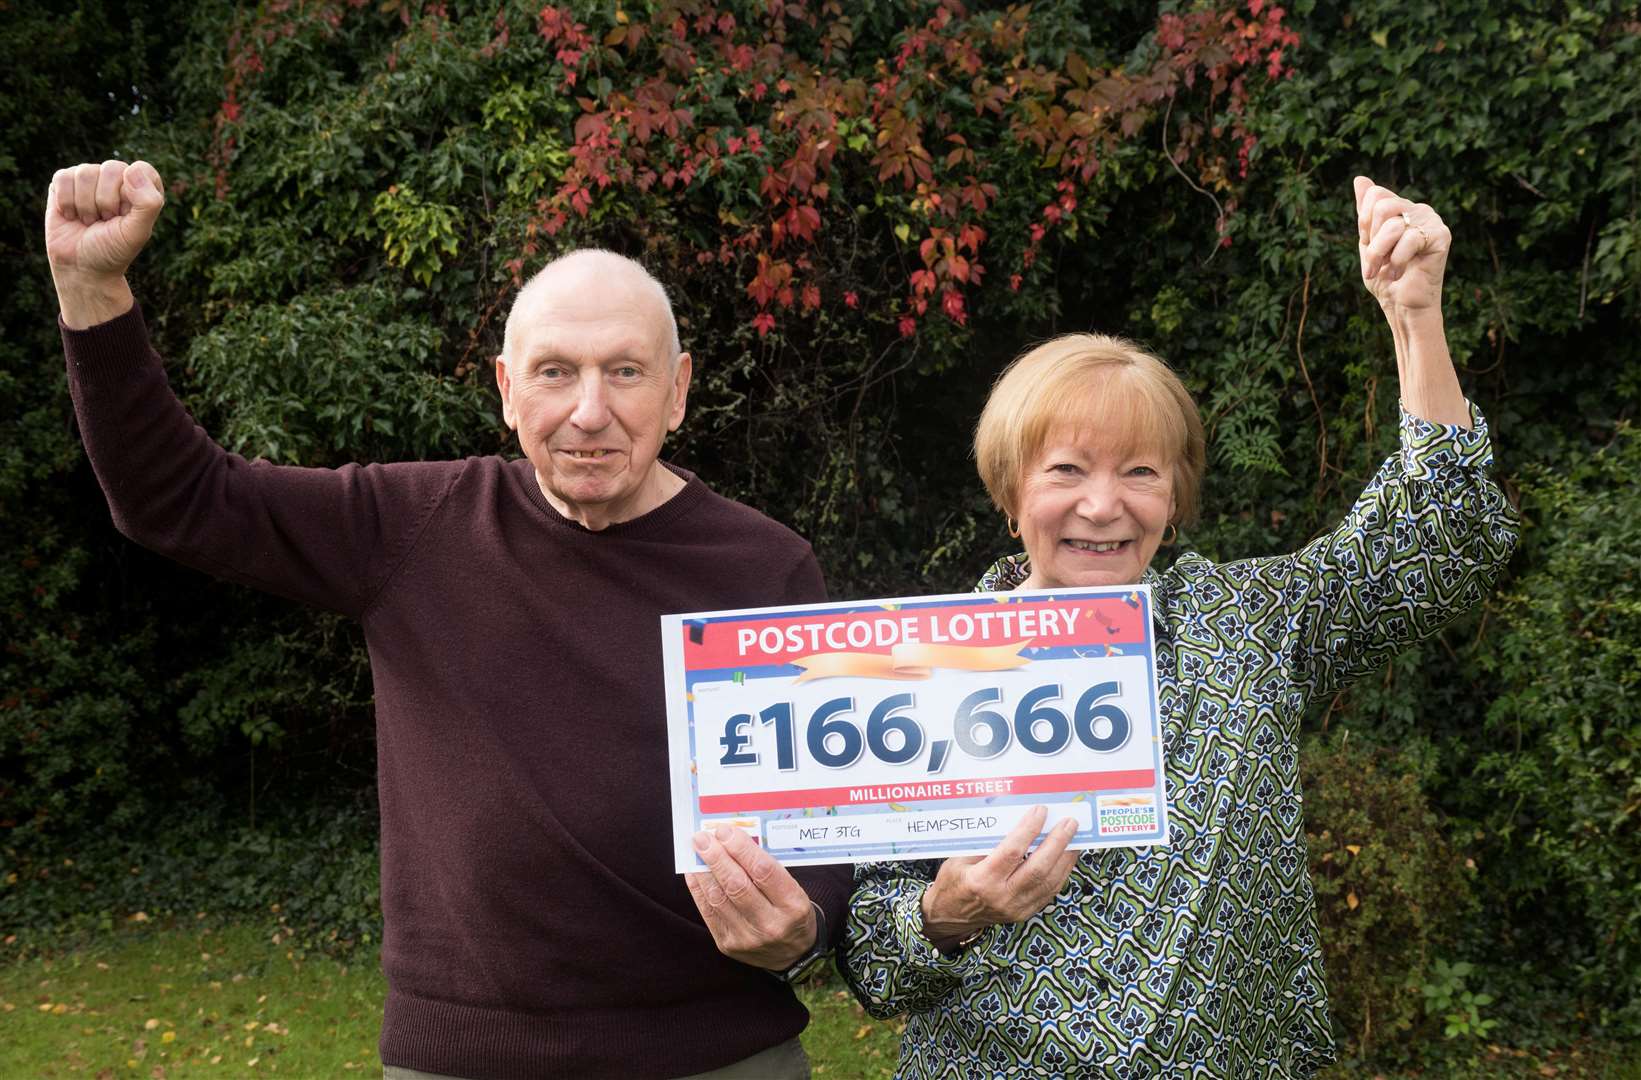 Tony and wife Jackie won £166,666